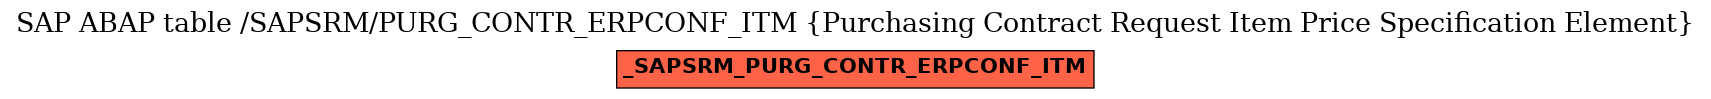 E-R Diagram for table /SAPSRM/PURG_CONTR_ERPCONF_ITM (Purchasing Contract Request Item Price Specification Element)